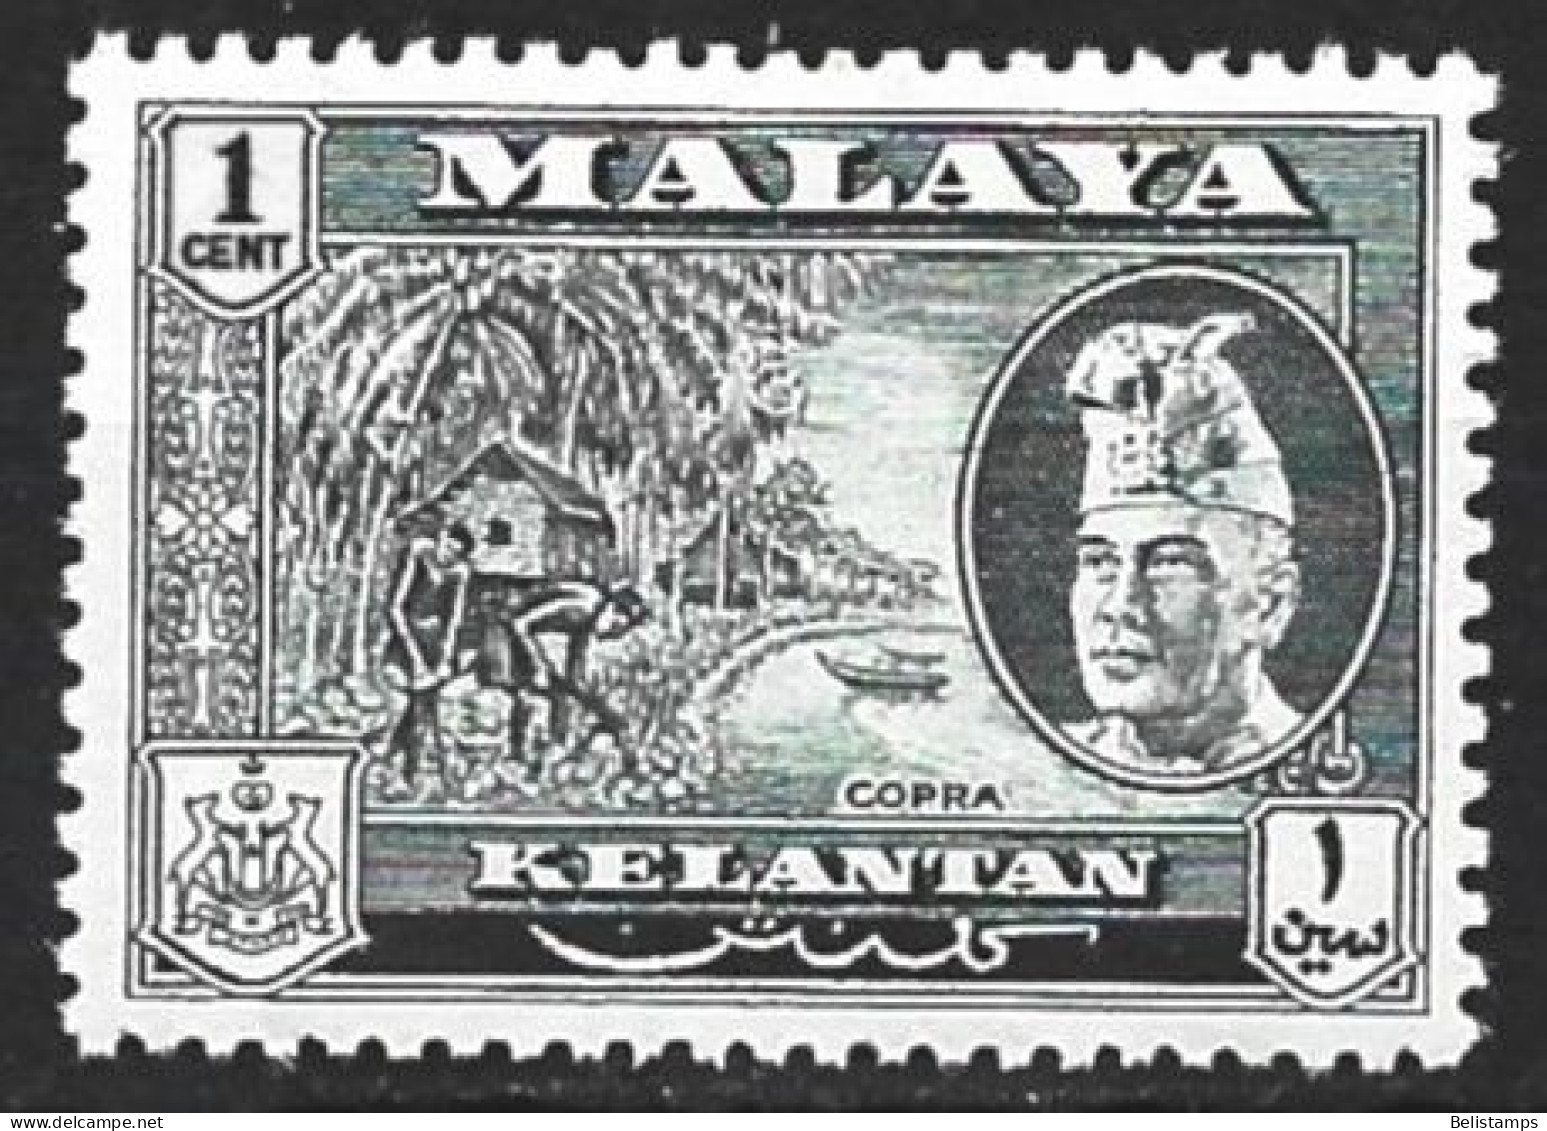 Malaya - Kelantan 1957. Scott #72 (MH) Sultan Ibrahim And Copra - Kelantan